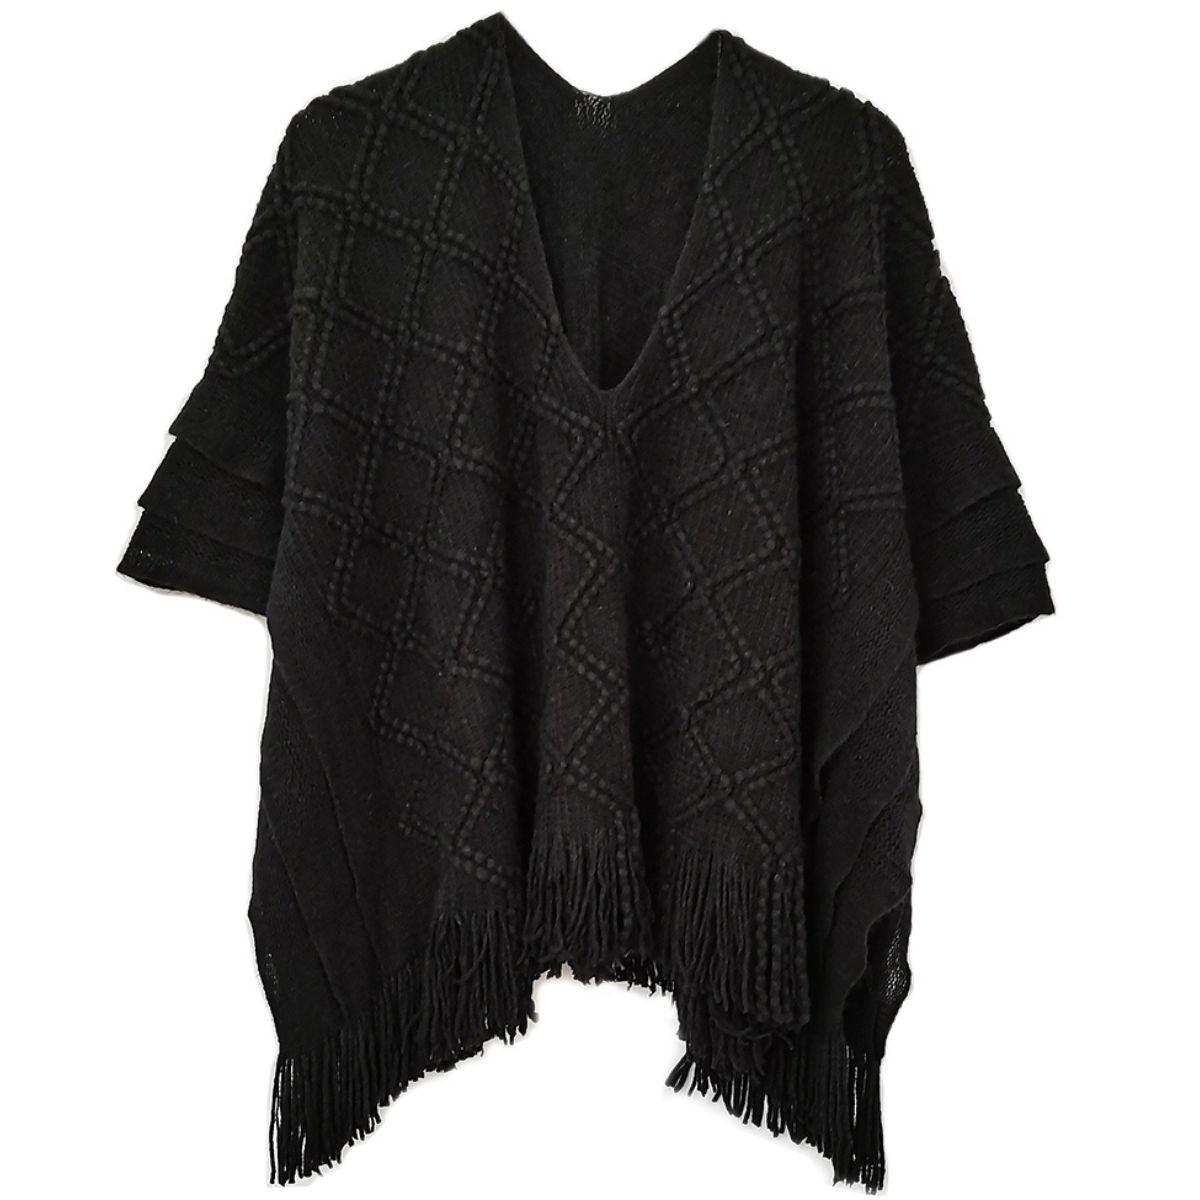 Stylish Black Crochet Poncho for Women - Unleash Your Inner Fashionista!